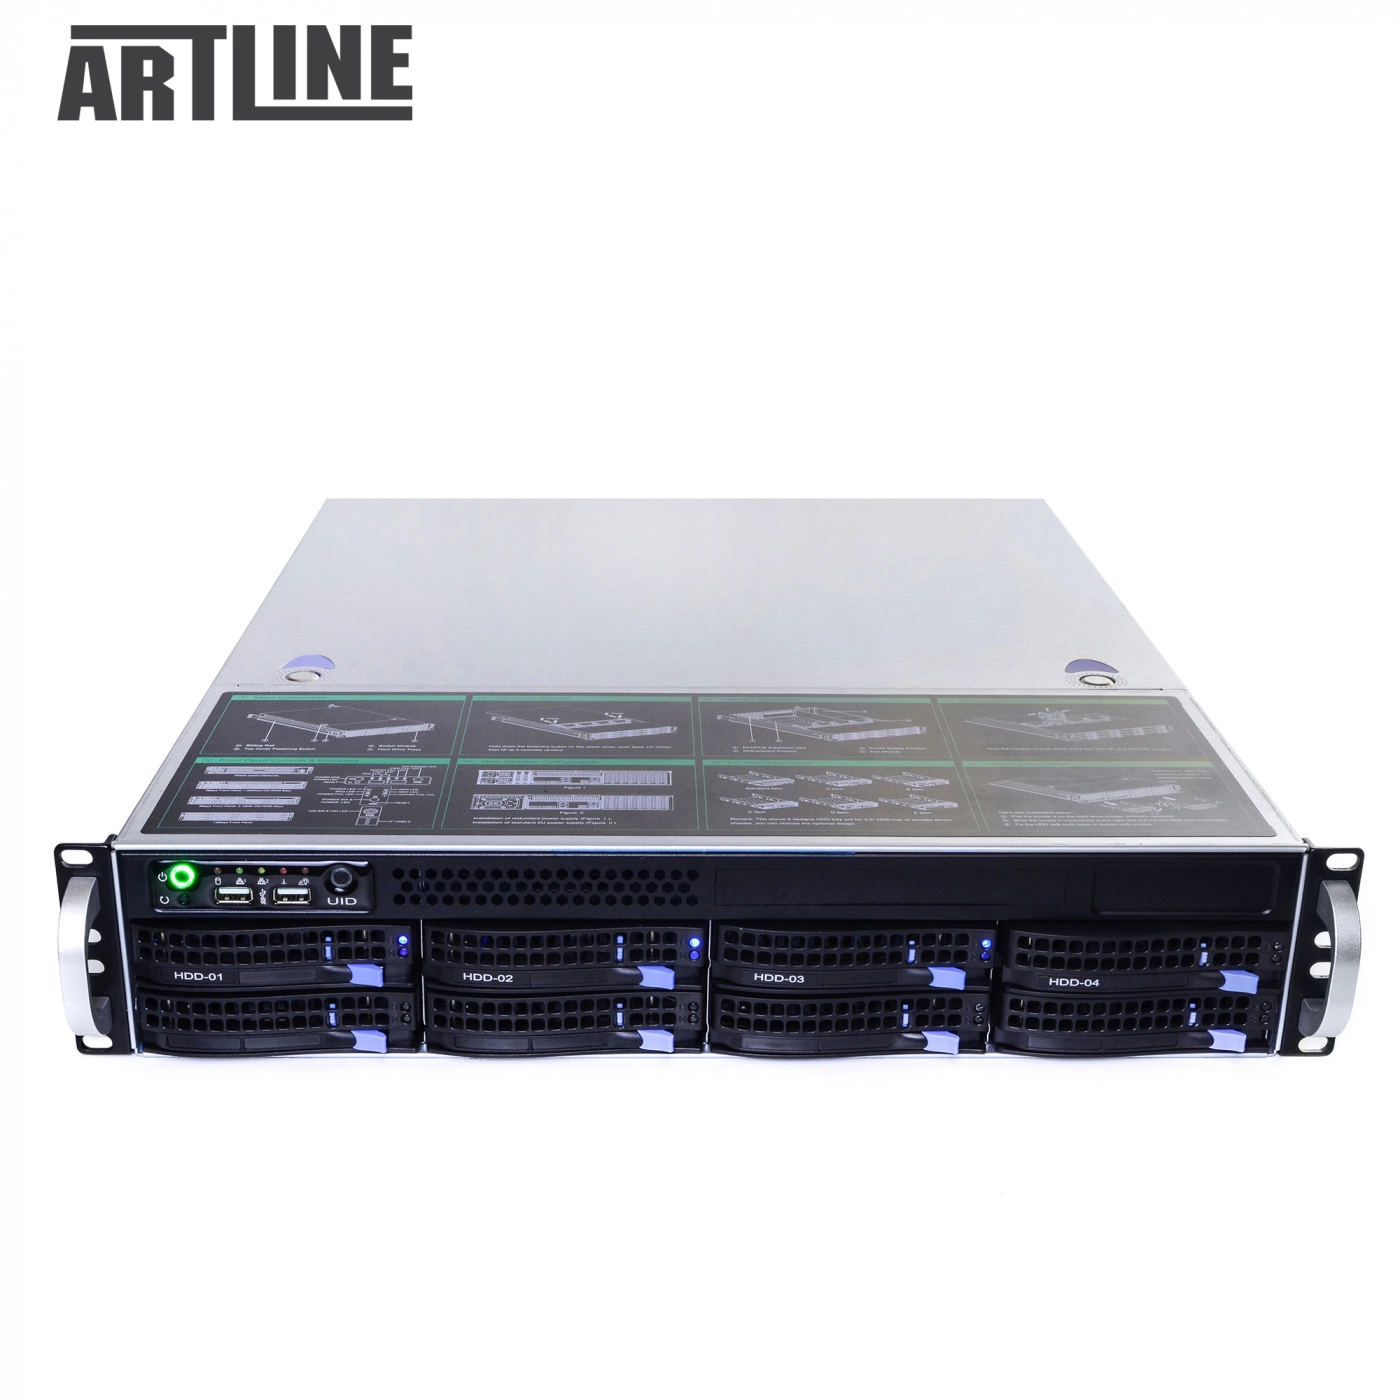 Купити Сервер ARTLINE Business R37v23 - фото 9